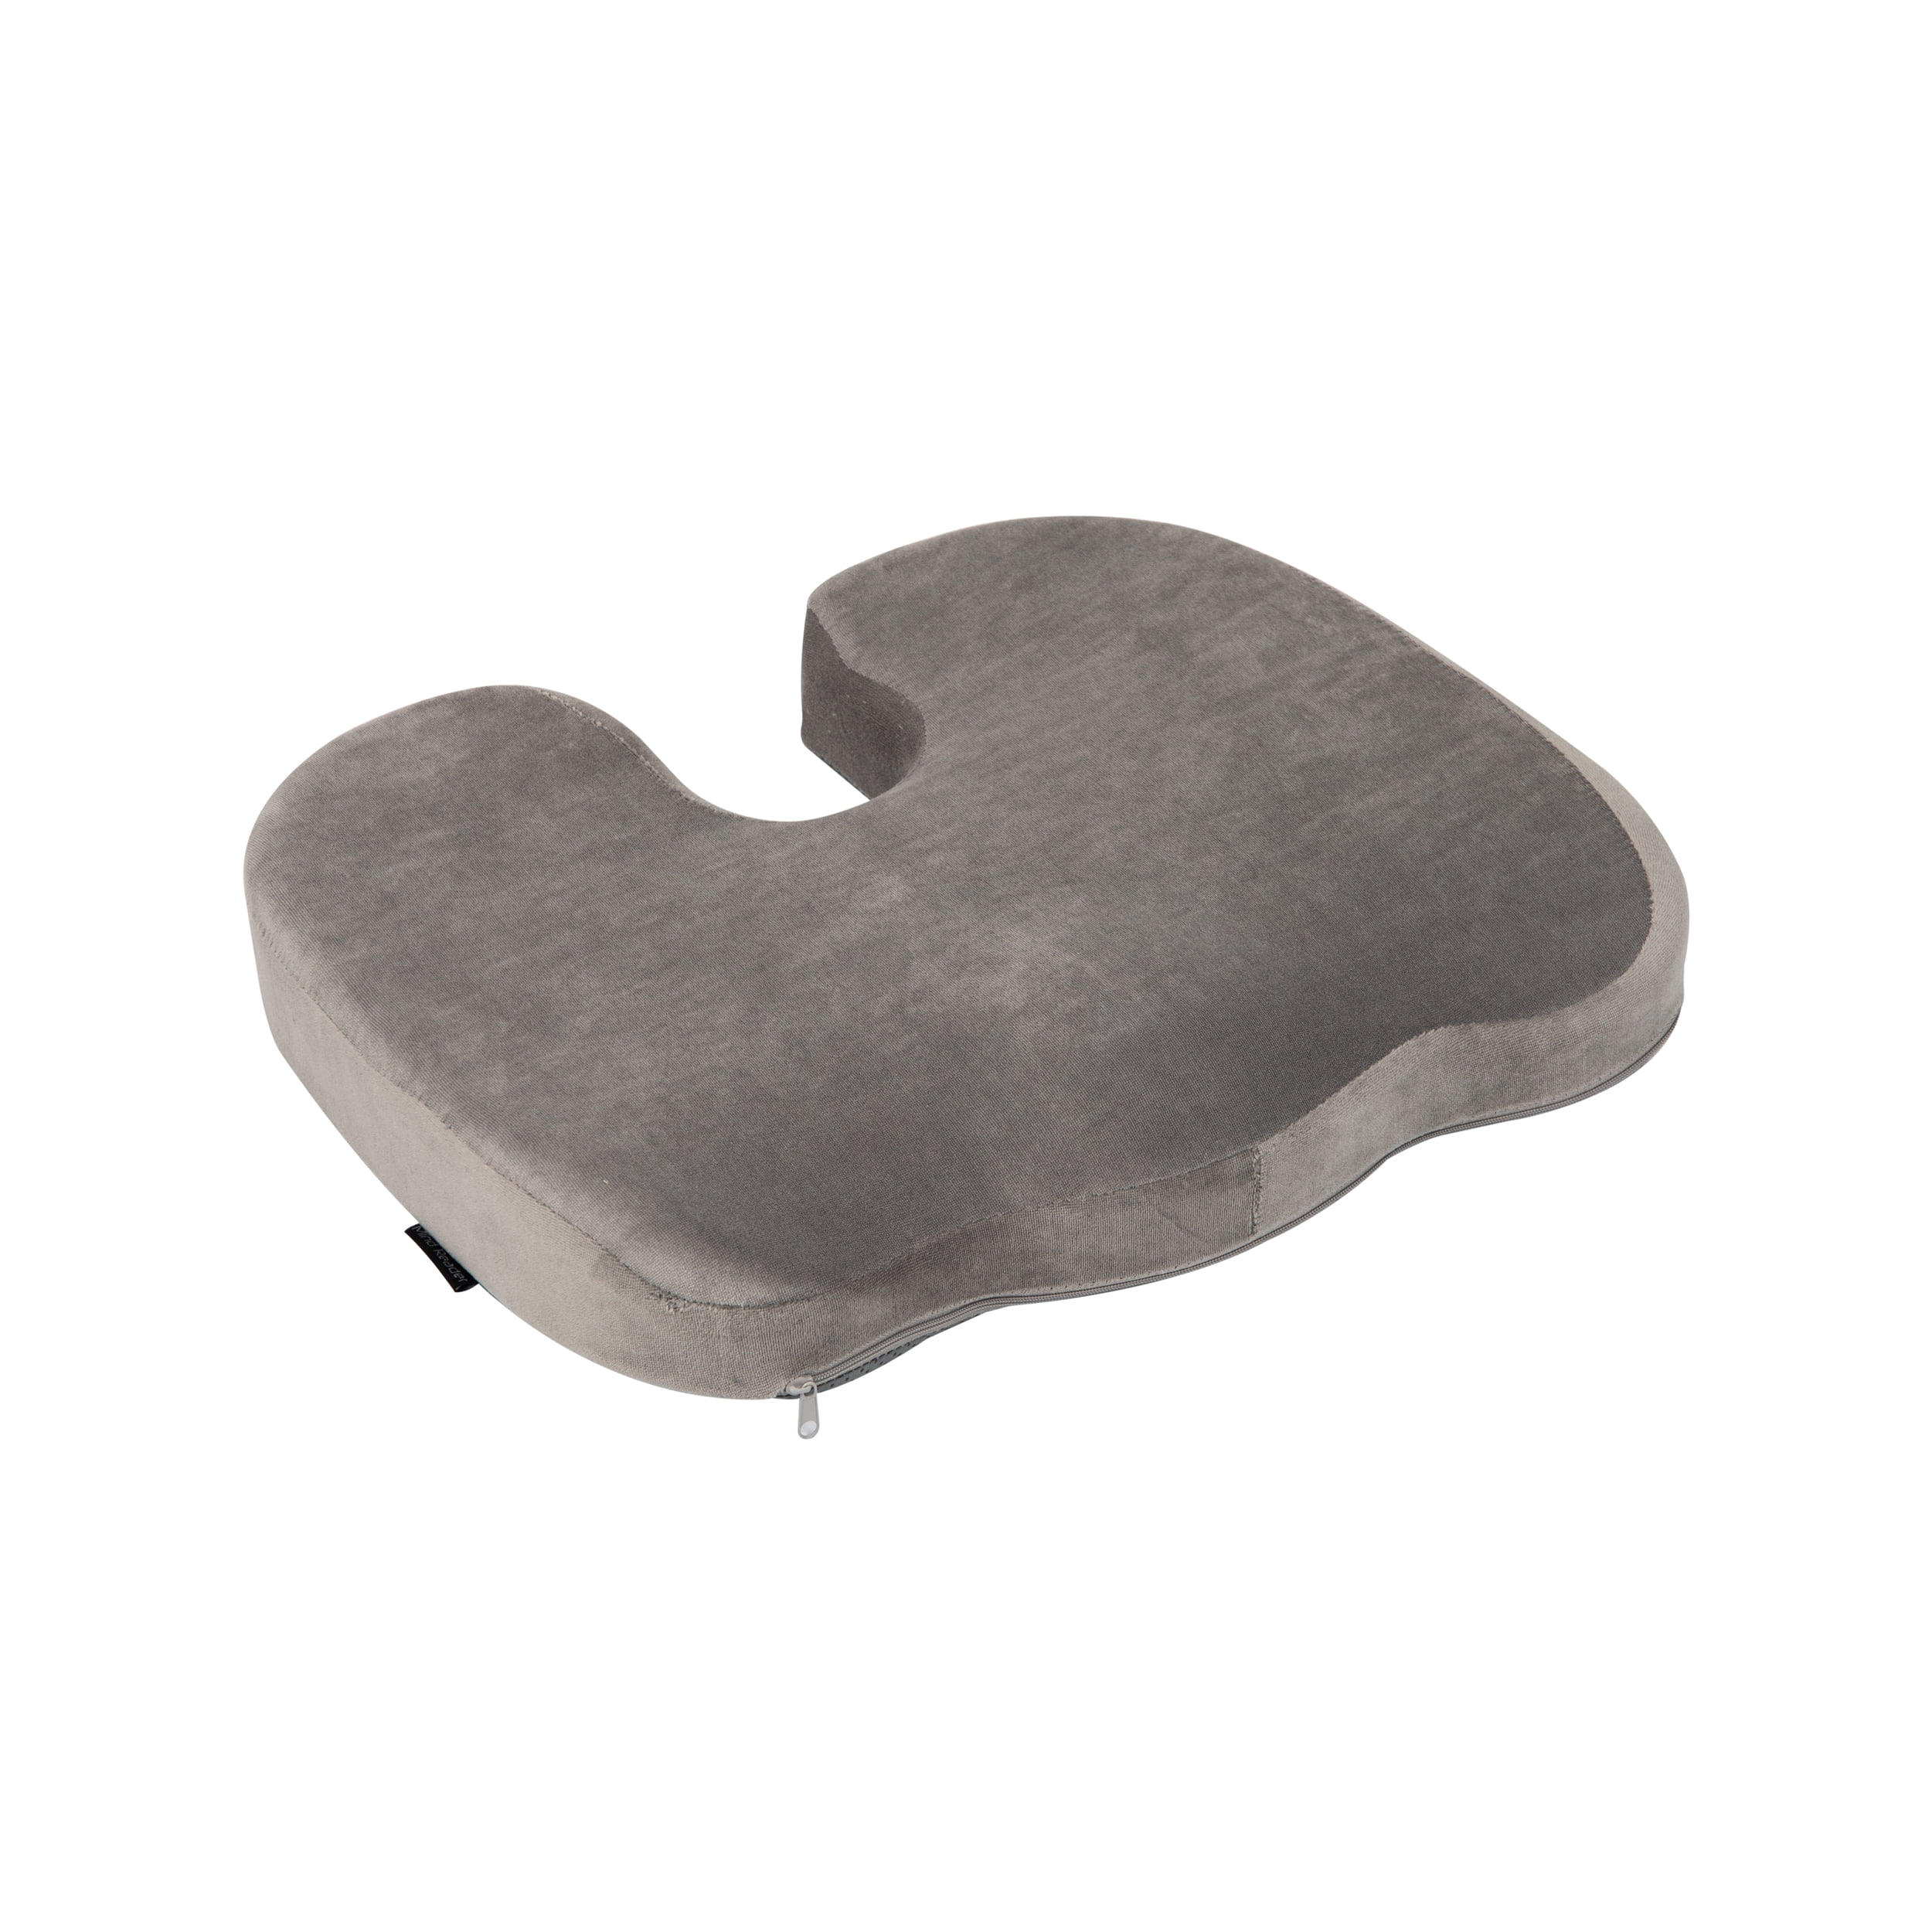  Mind Reader Office Chair Cushion, Ergonomic, Orthopedic,  Portable, Car Seat, Memory Foam, 18.25 L x 15.5 W x 4 H, Gray : Patio,  Lawn & Garden